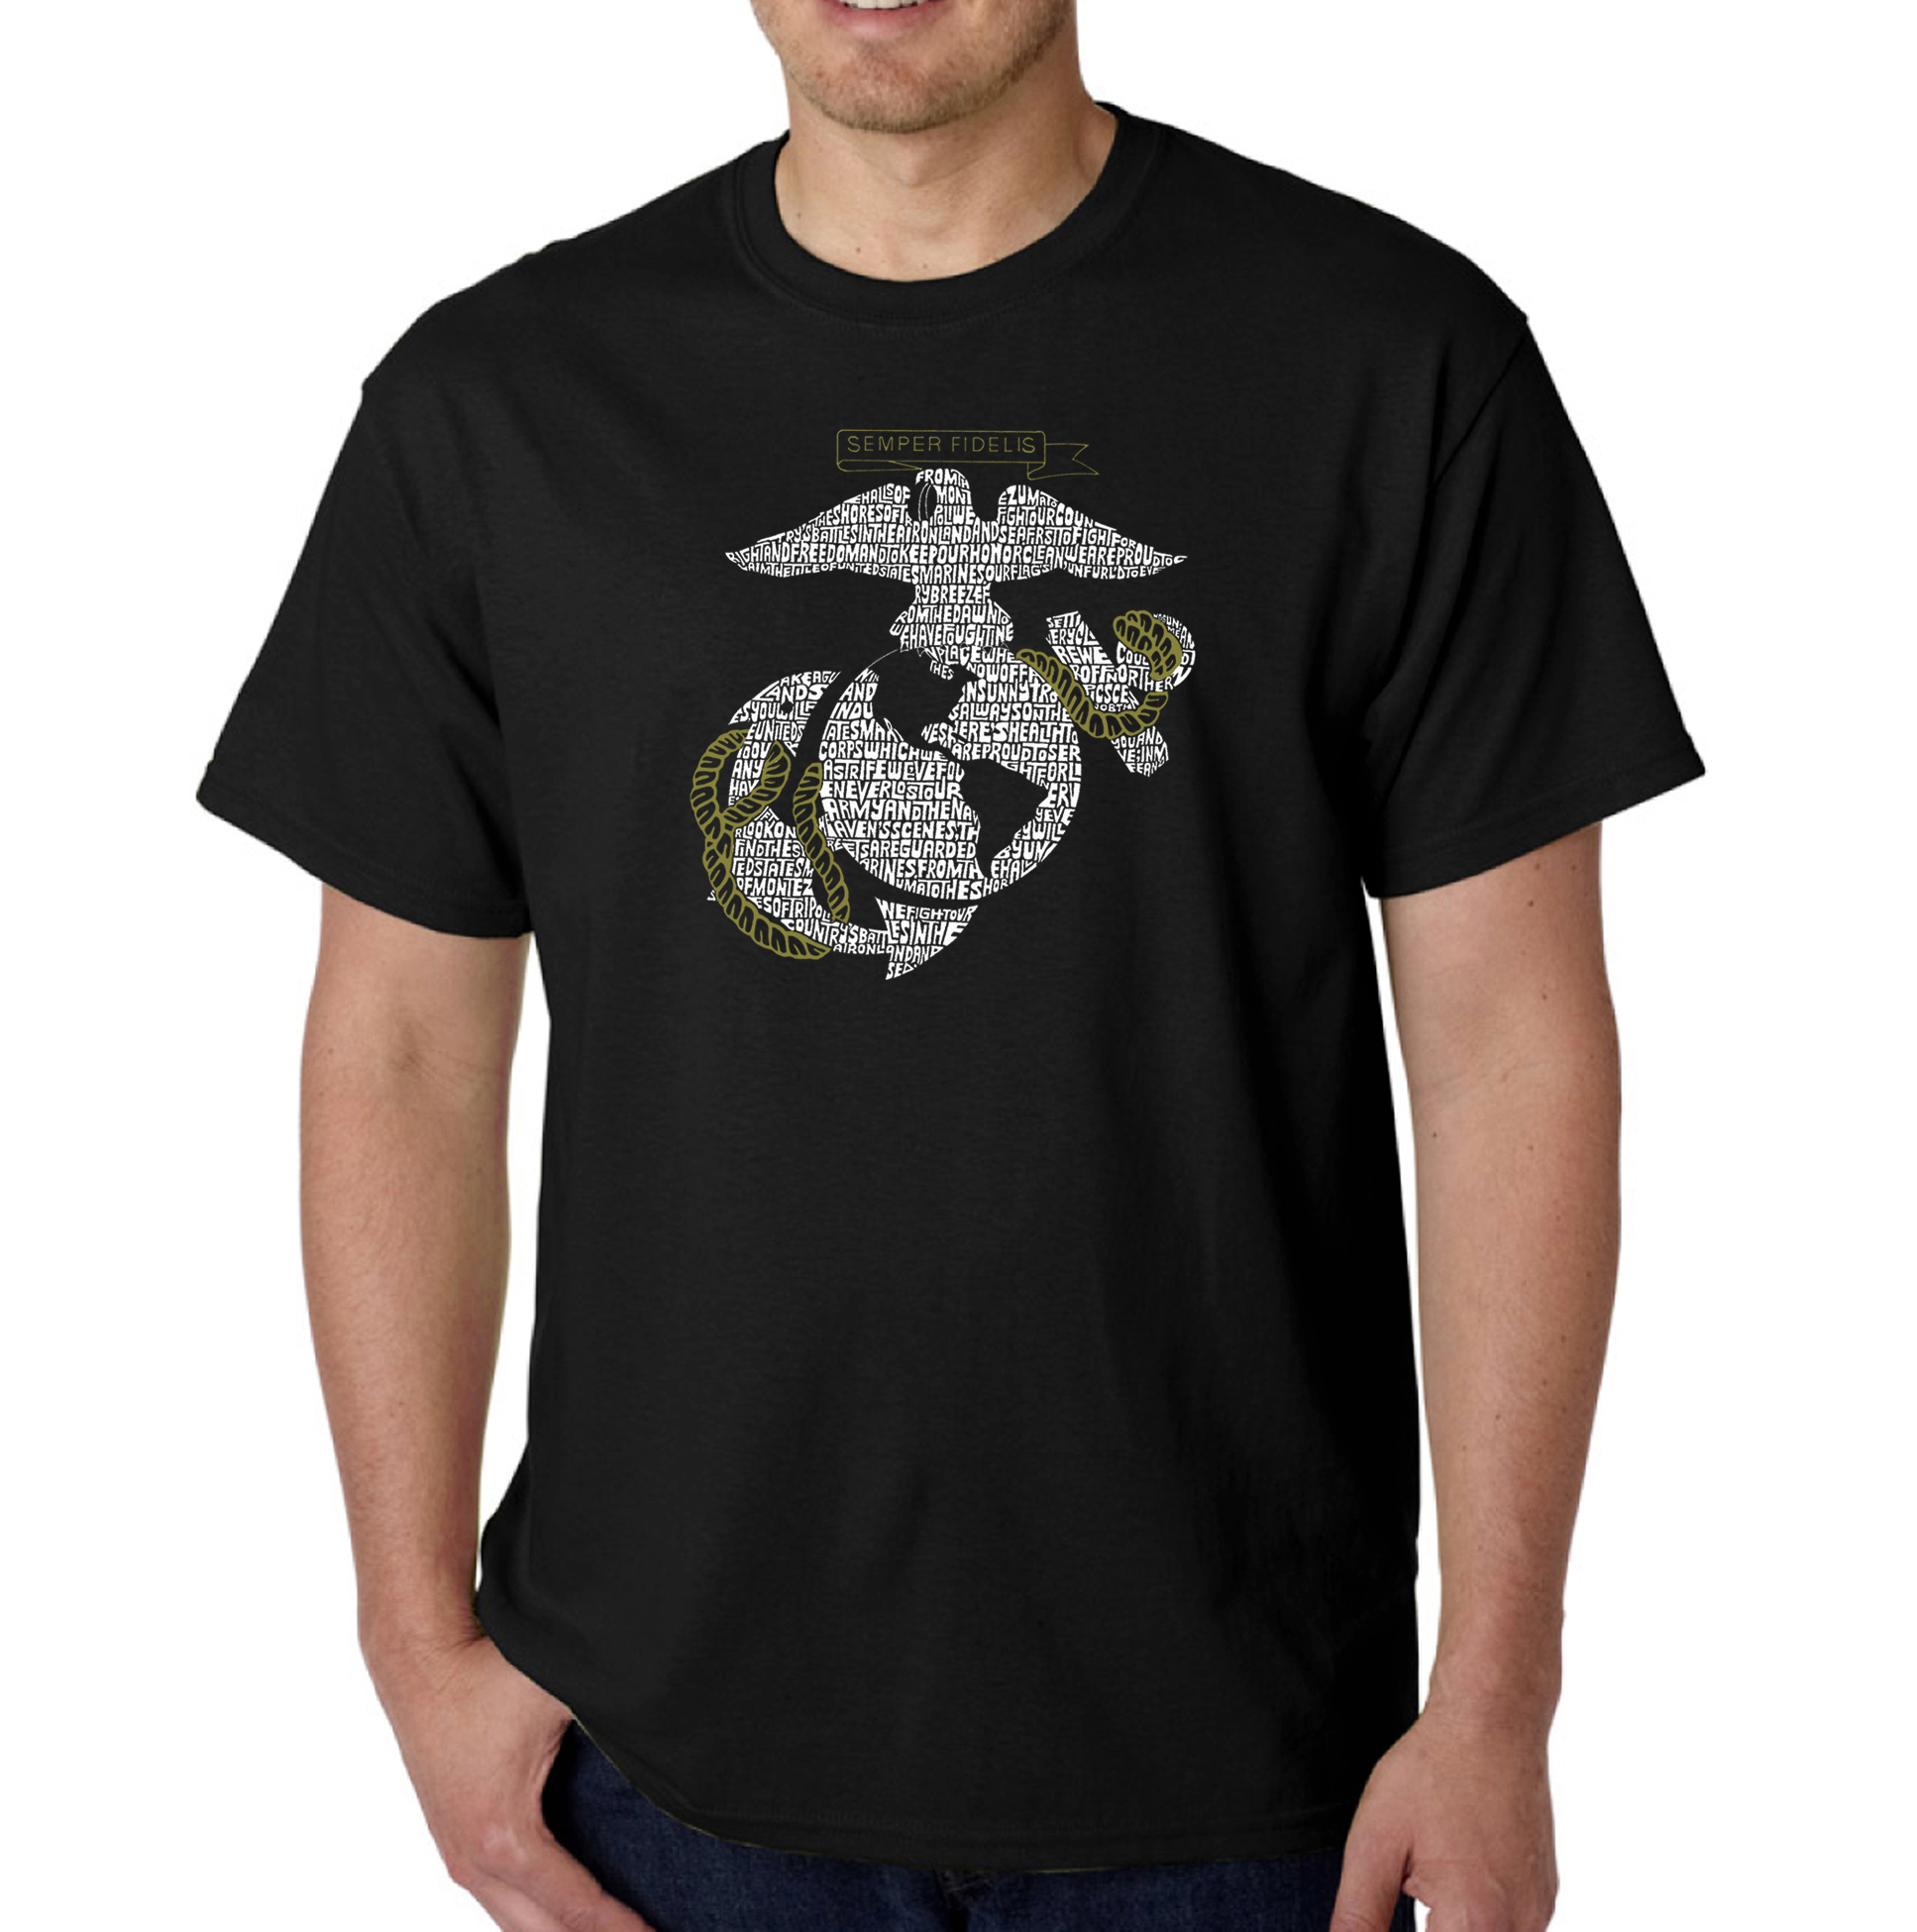 Los Angeles Pop Art Men's Word Art T-Shirt - Lyrics To The Marines Hymn